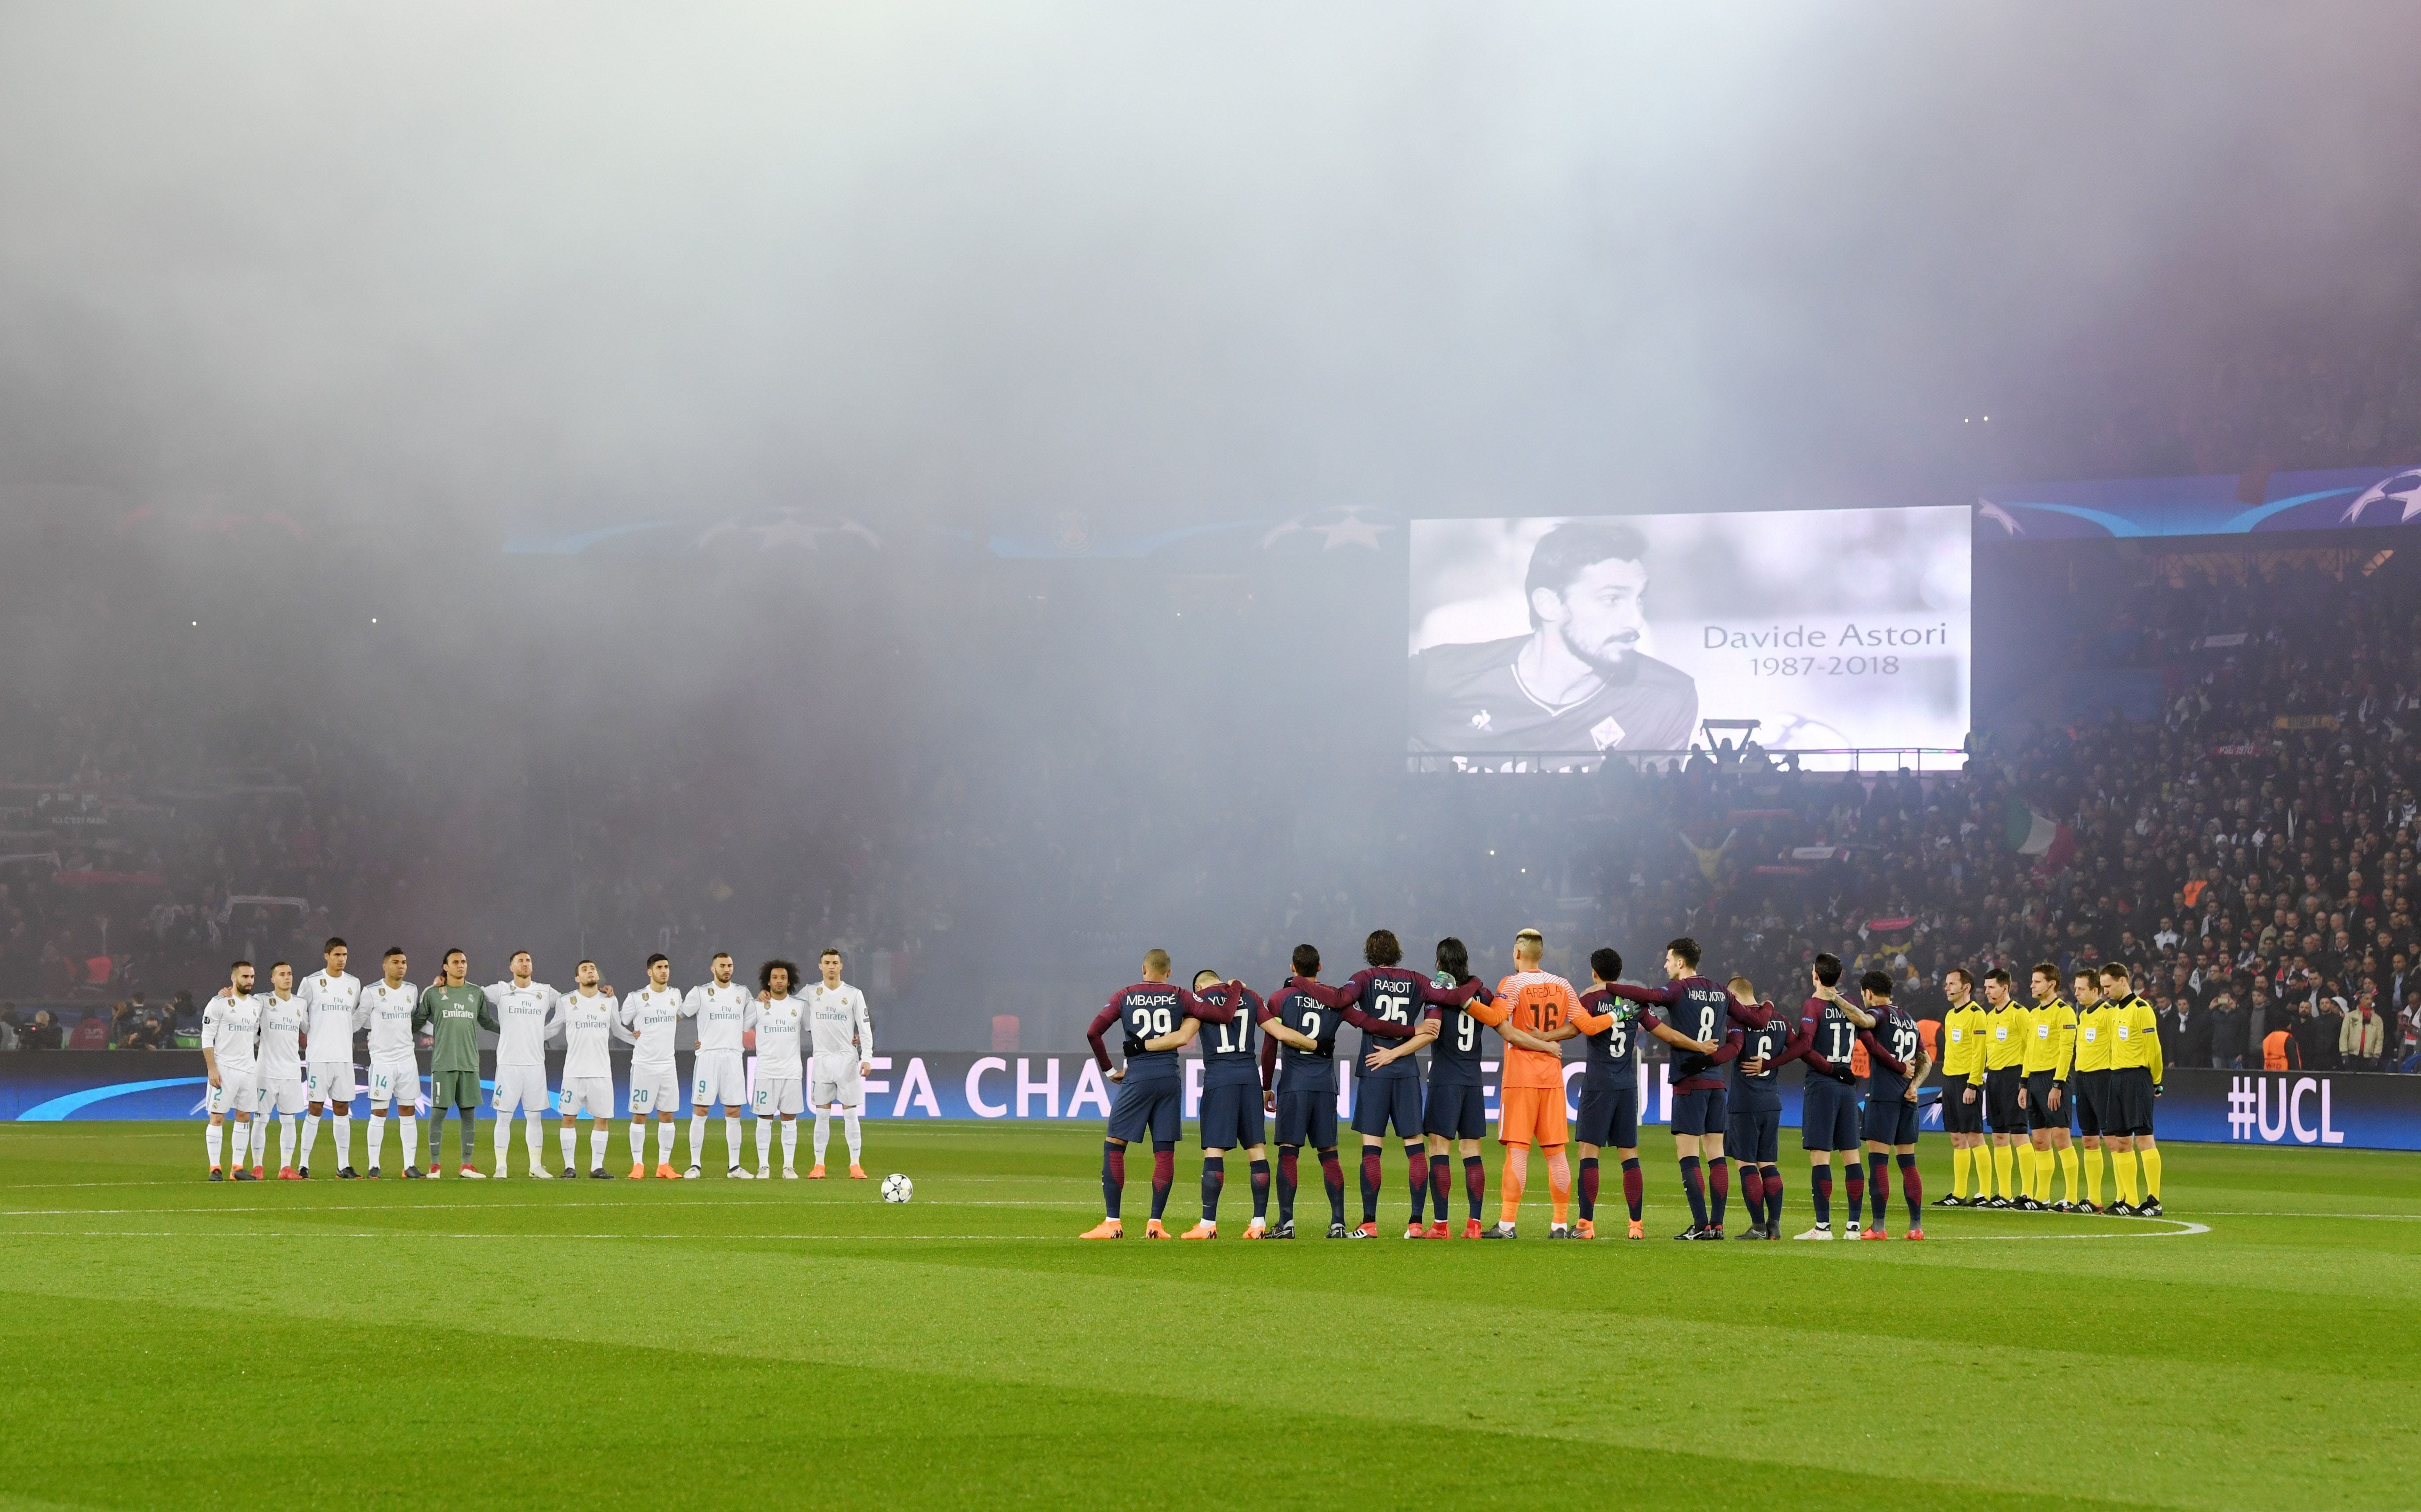 Davide Astori tribute PSG Real Madrid Champions League 06032018.jpg